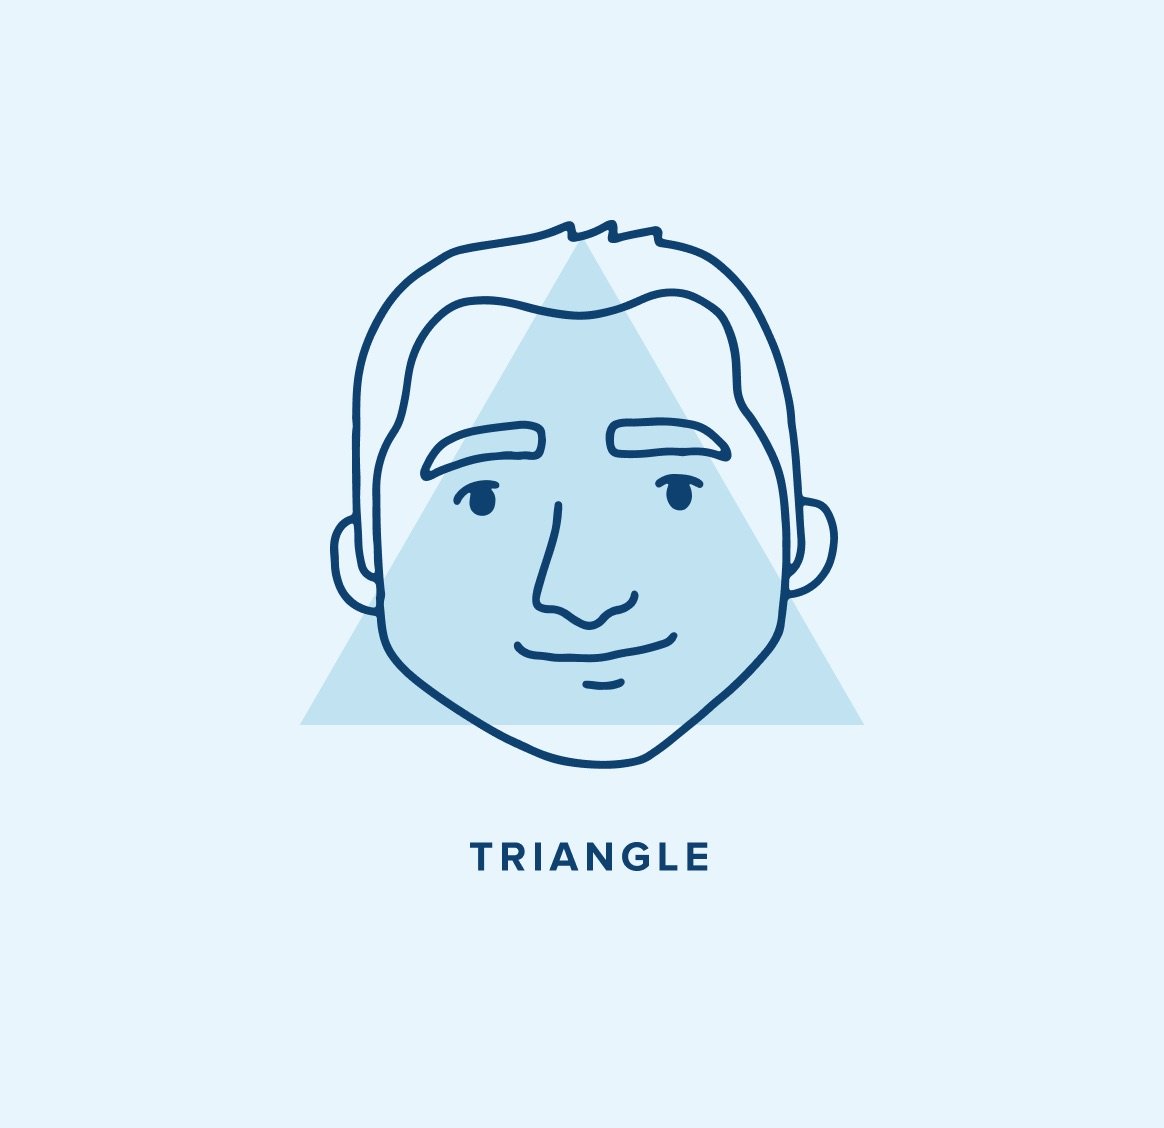 Illustration of a triangle face shape